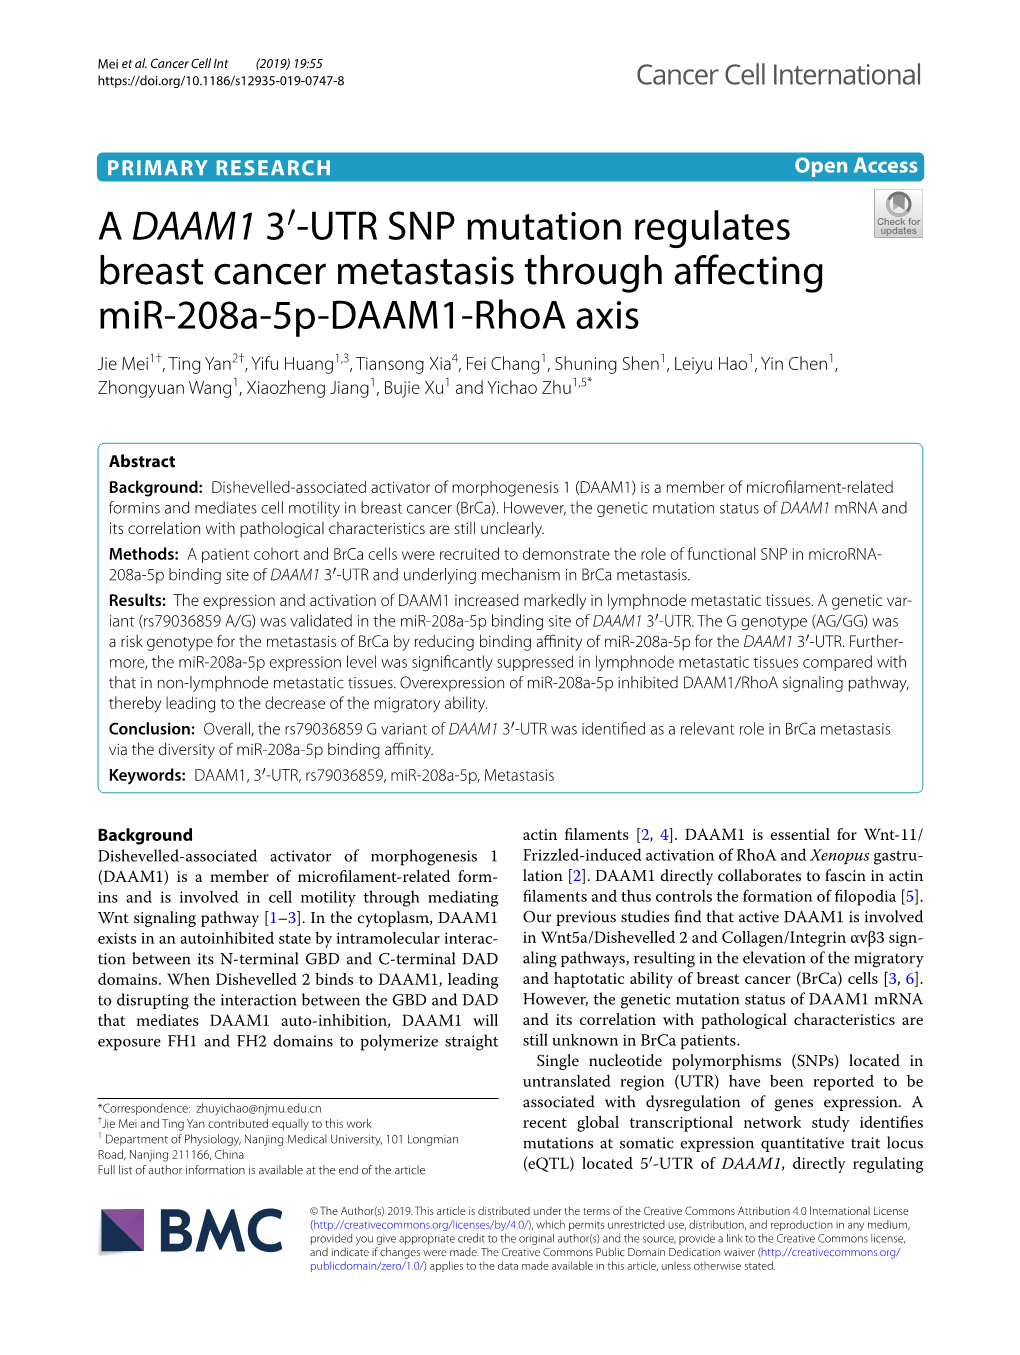 A DAAM1 3′-UTR SNP Mutation Regulates Breast Cancer Metastasis